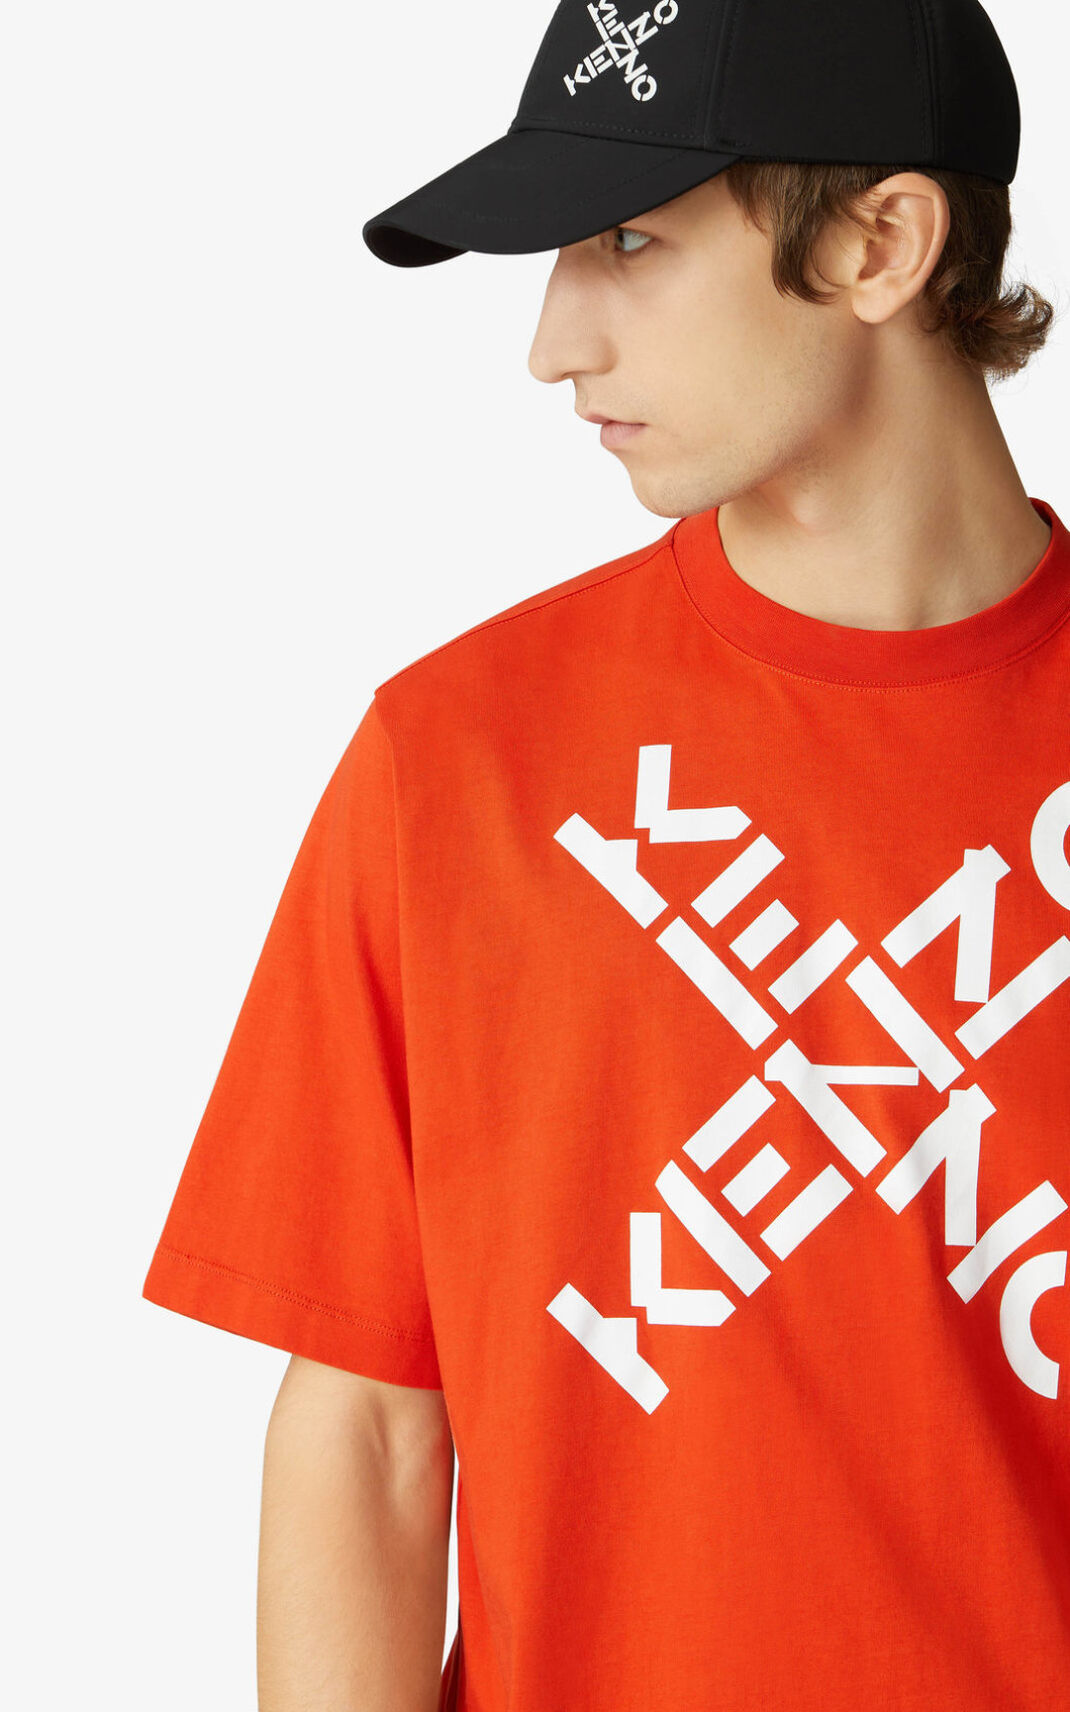 Kenzo Sport Big X Tシャツ メンズ 深いオレンジ - ULTRZE326